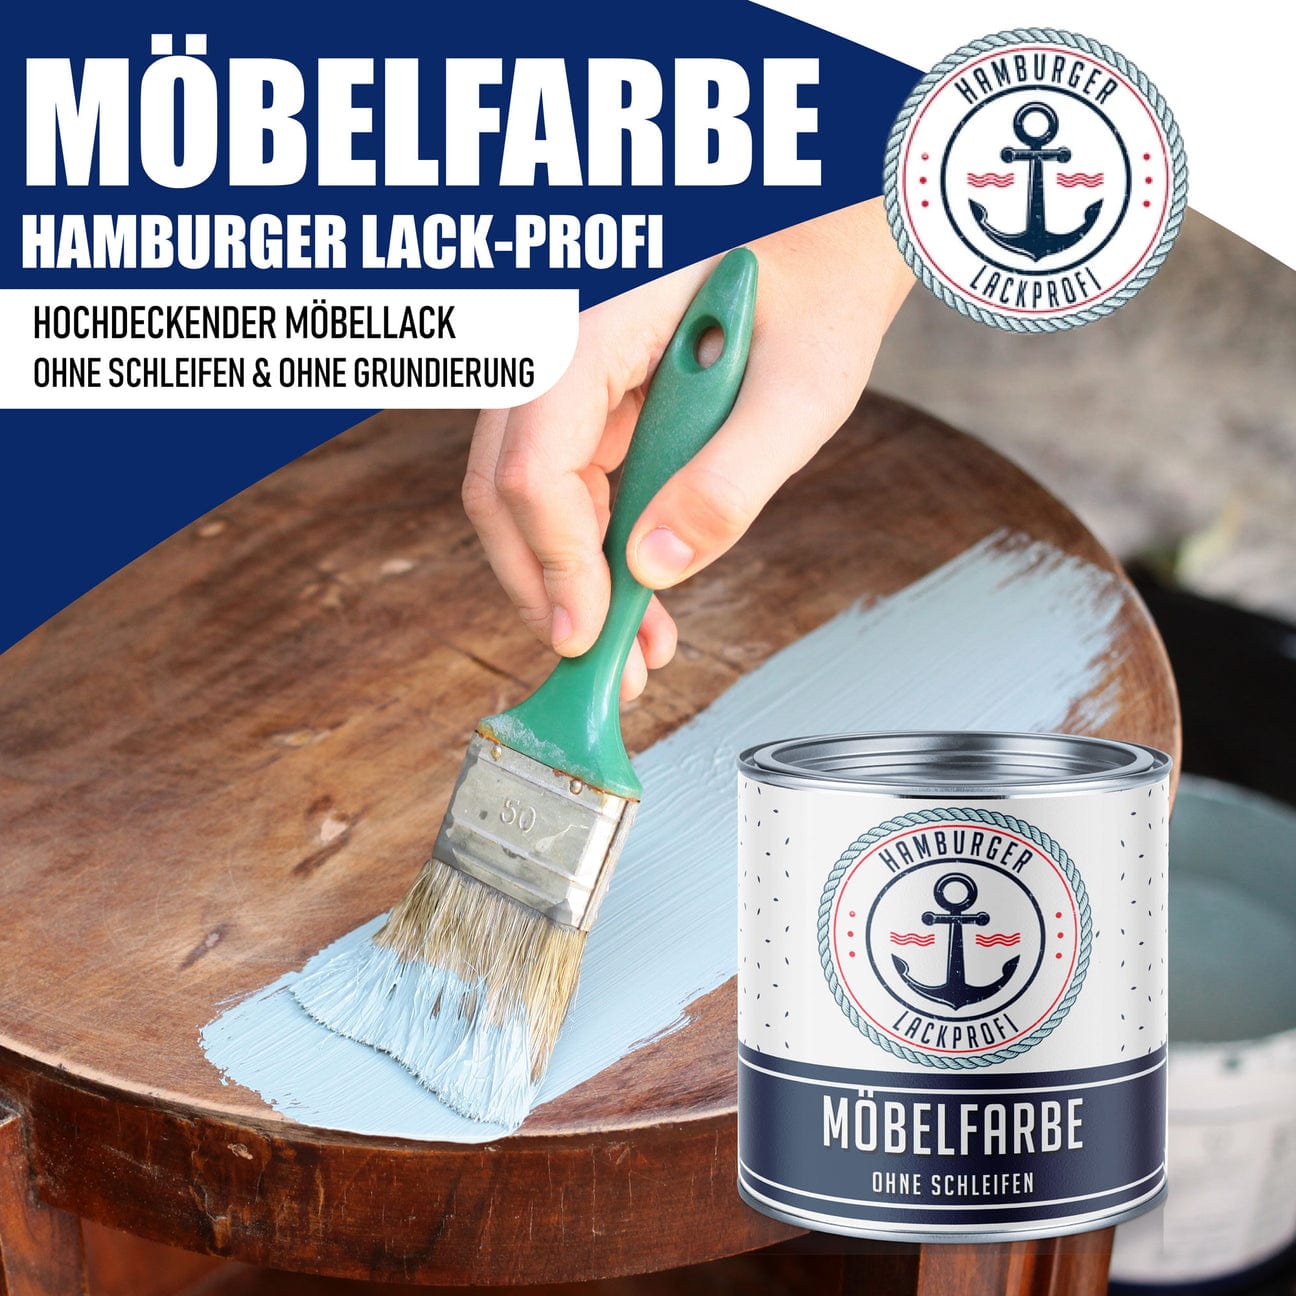 Hamburger Lack-Profi Möbelfarbe ohne Schleifen RAL 5002 Ultramarineblau - Möbellack Hamburger Lack-Profi